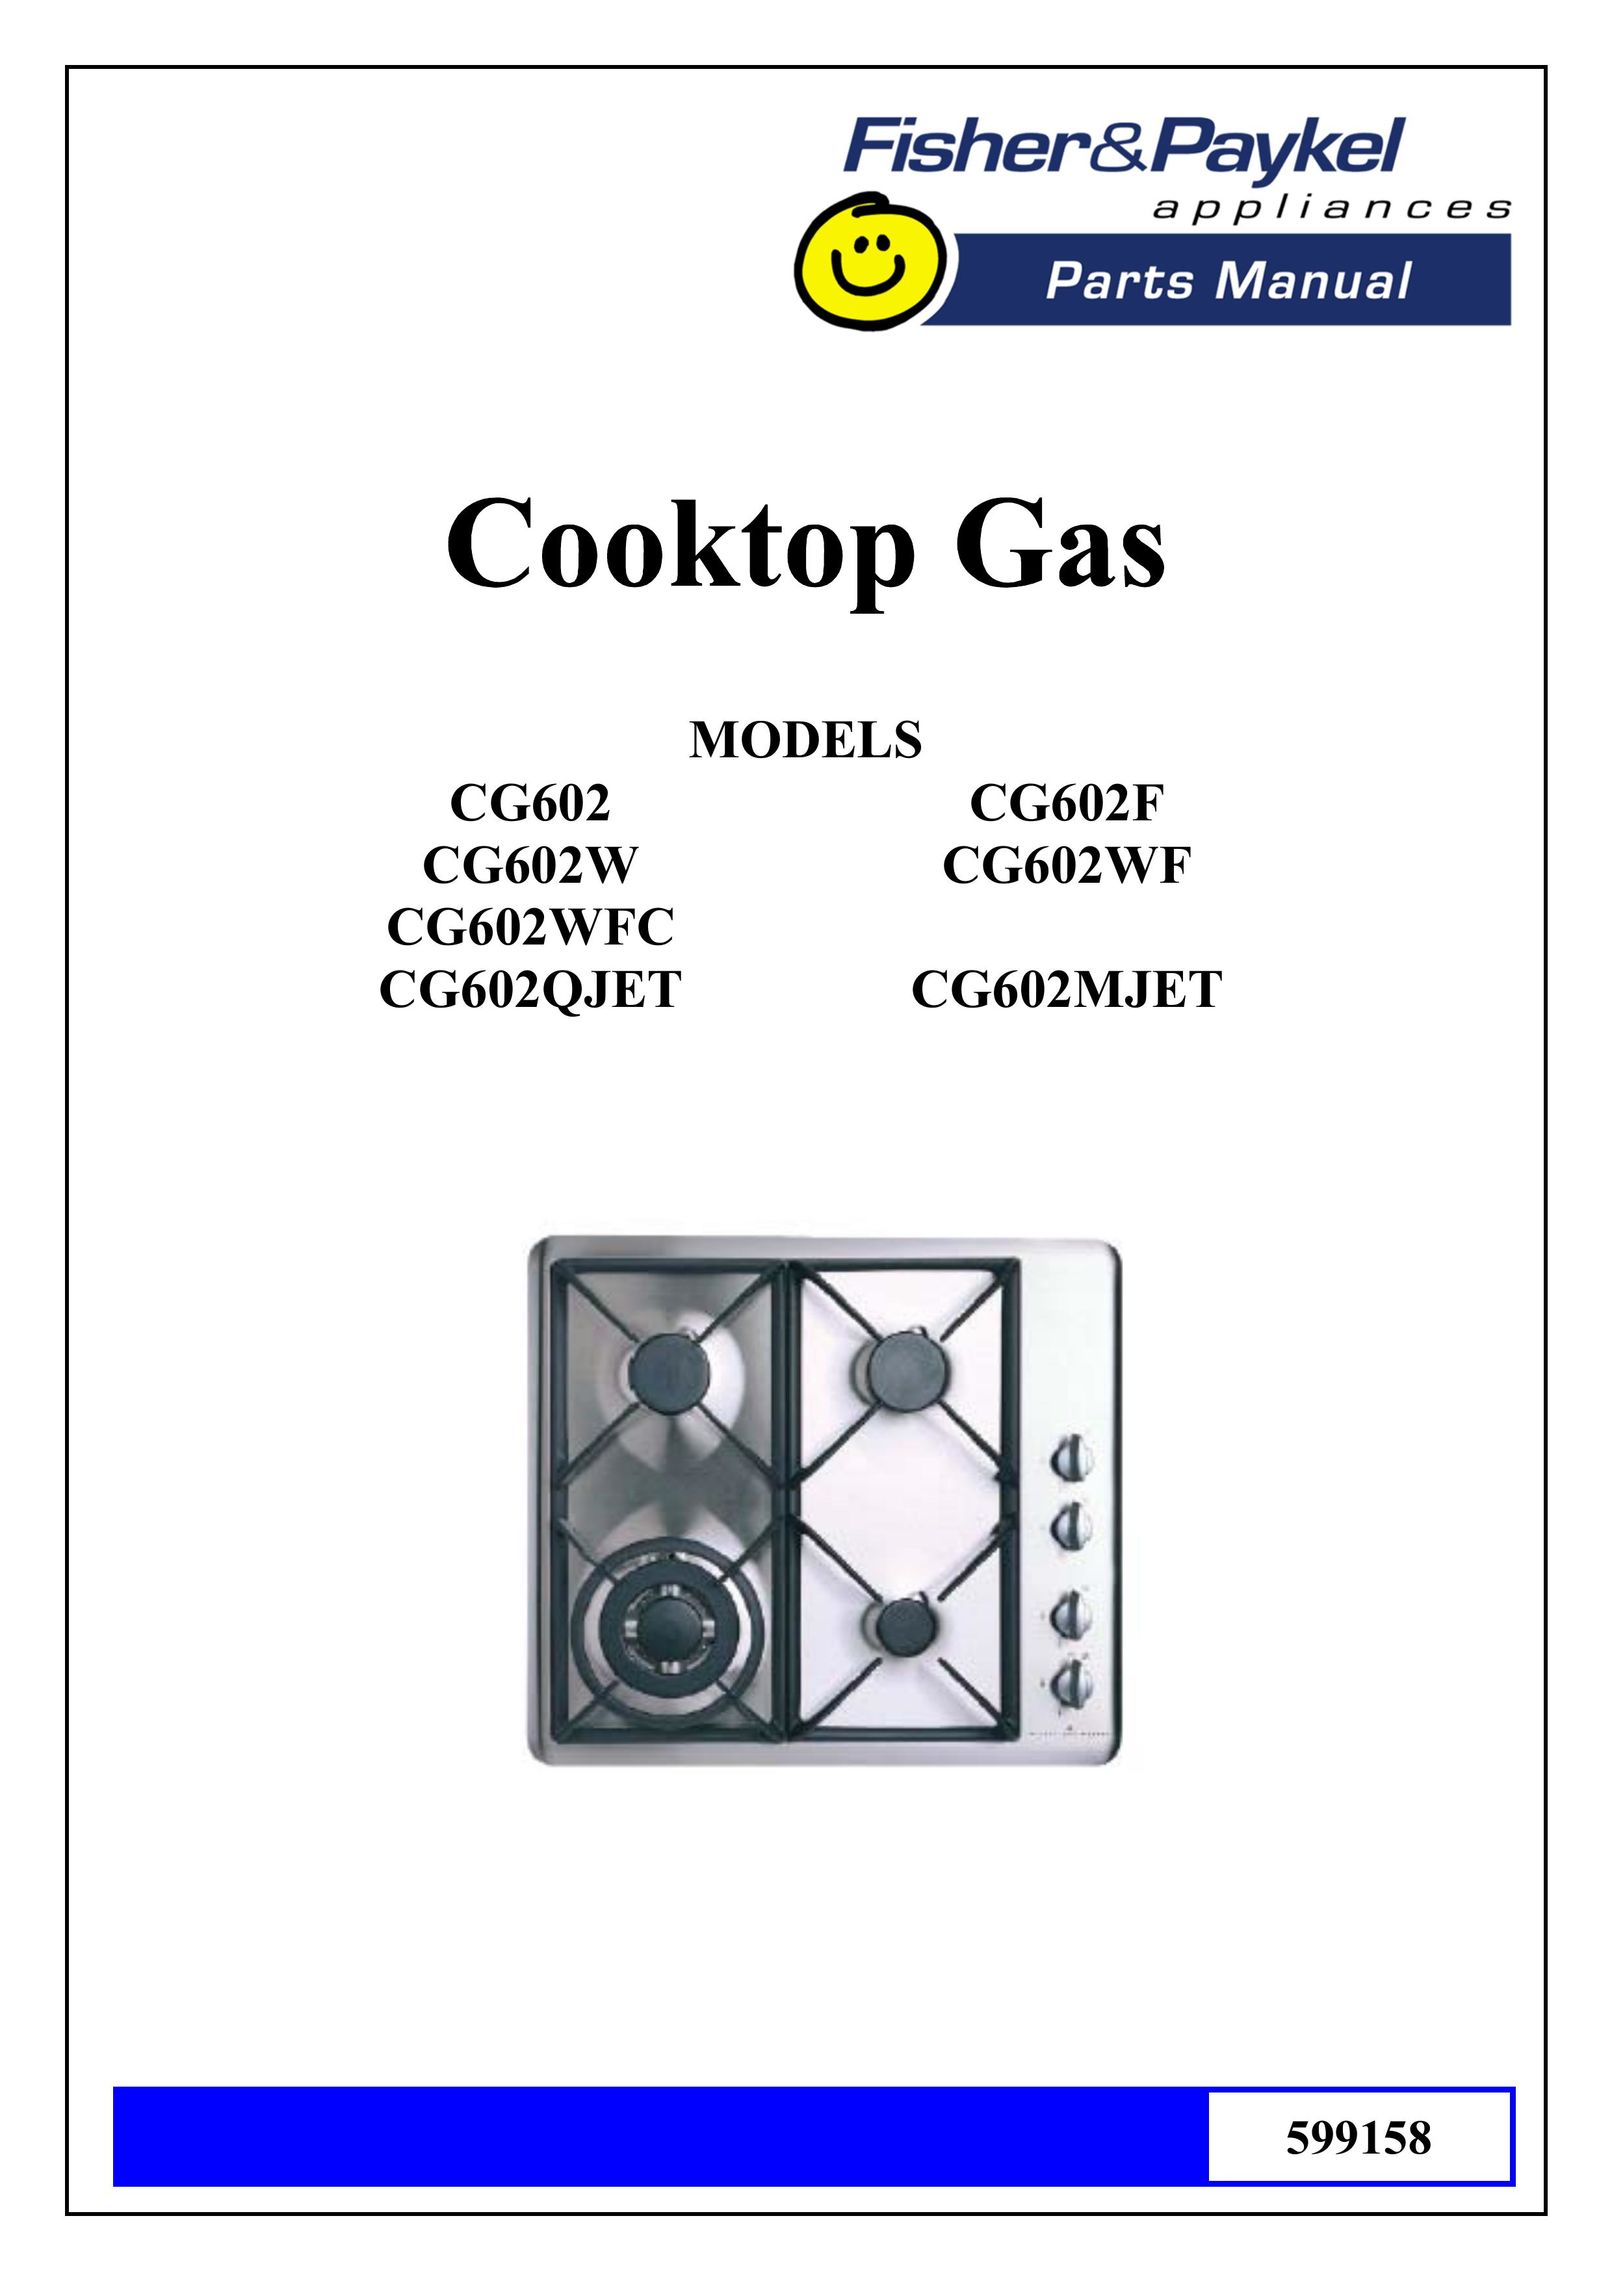 Fisher & Paykel CG602WF Cooktop User Manual